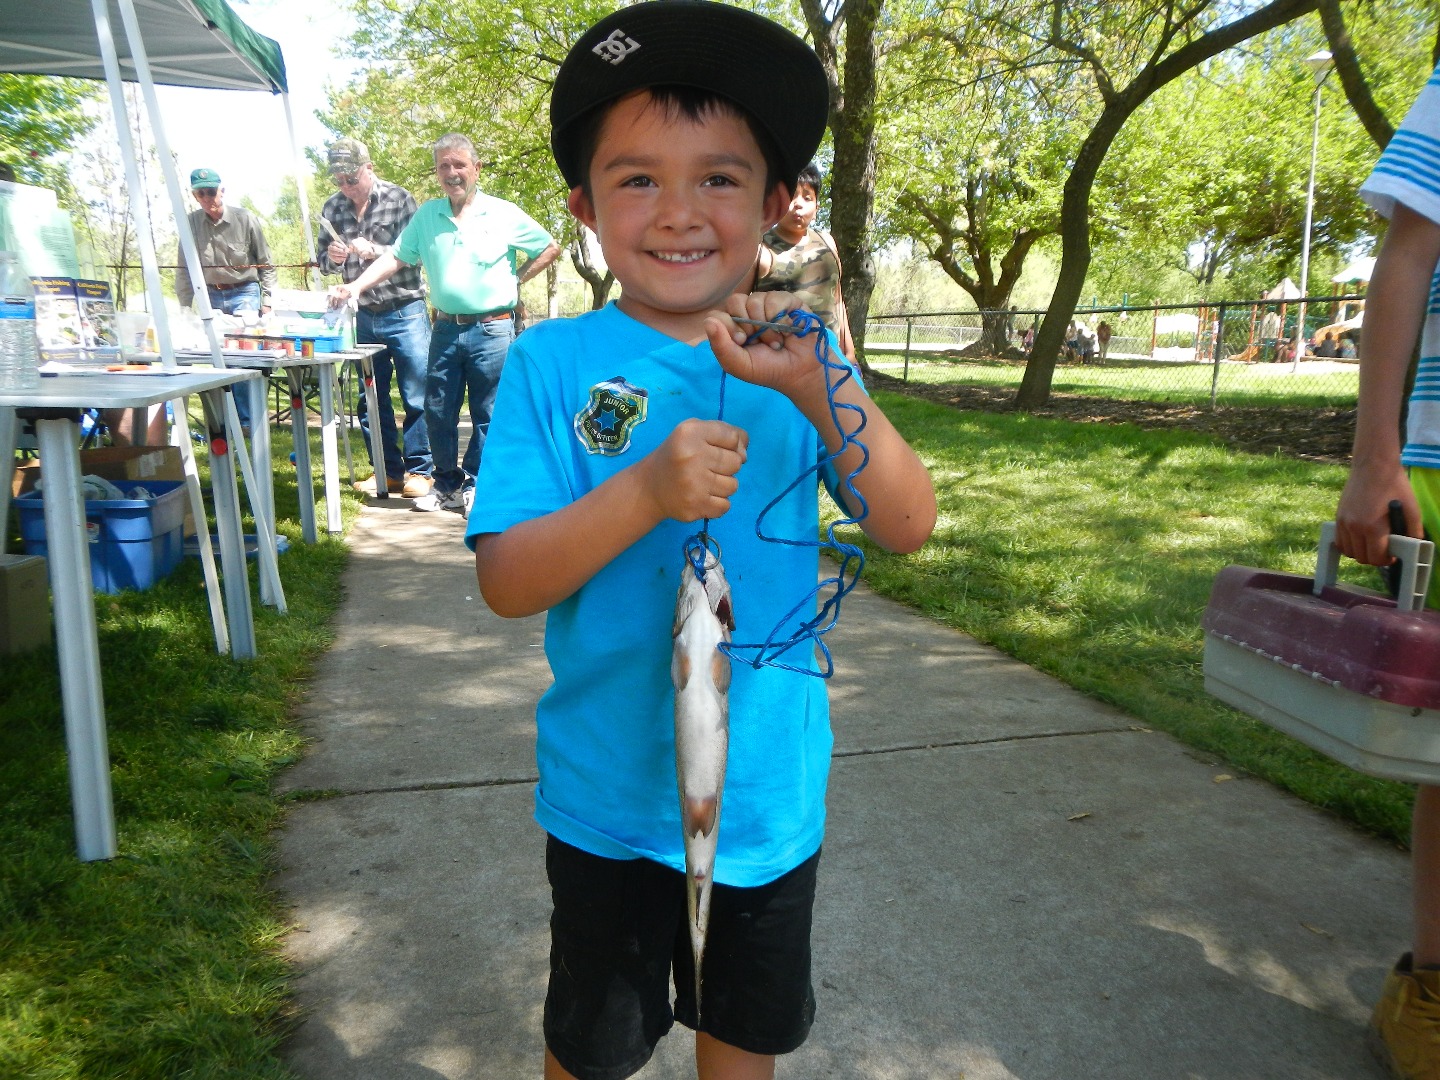 Volunteers for Kids Fishing Needed